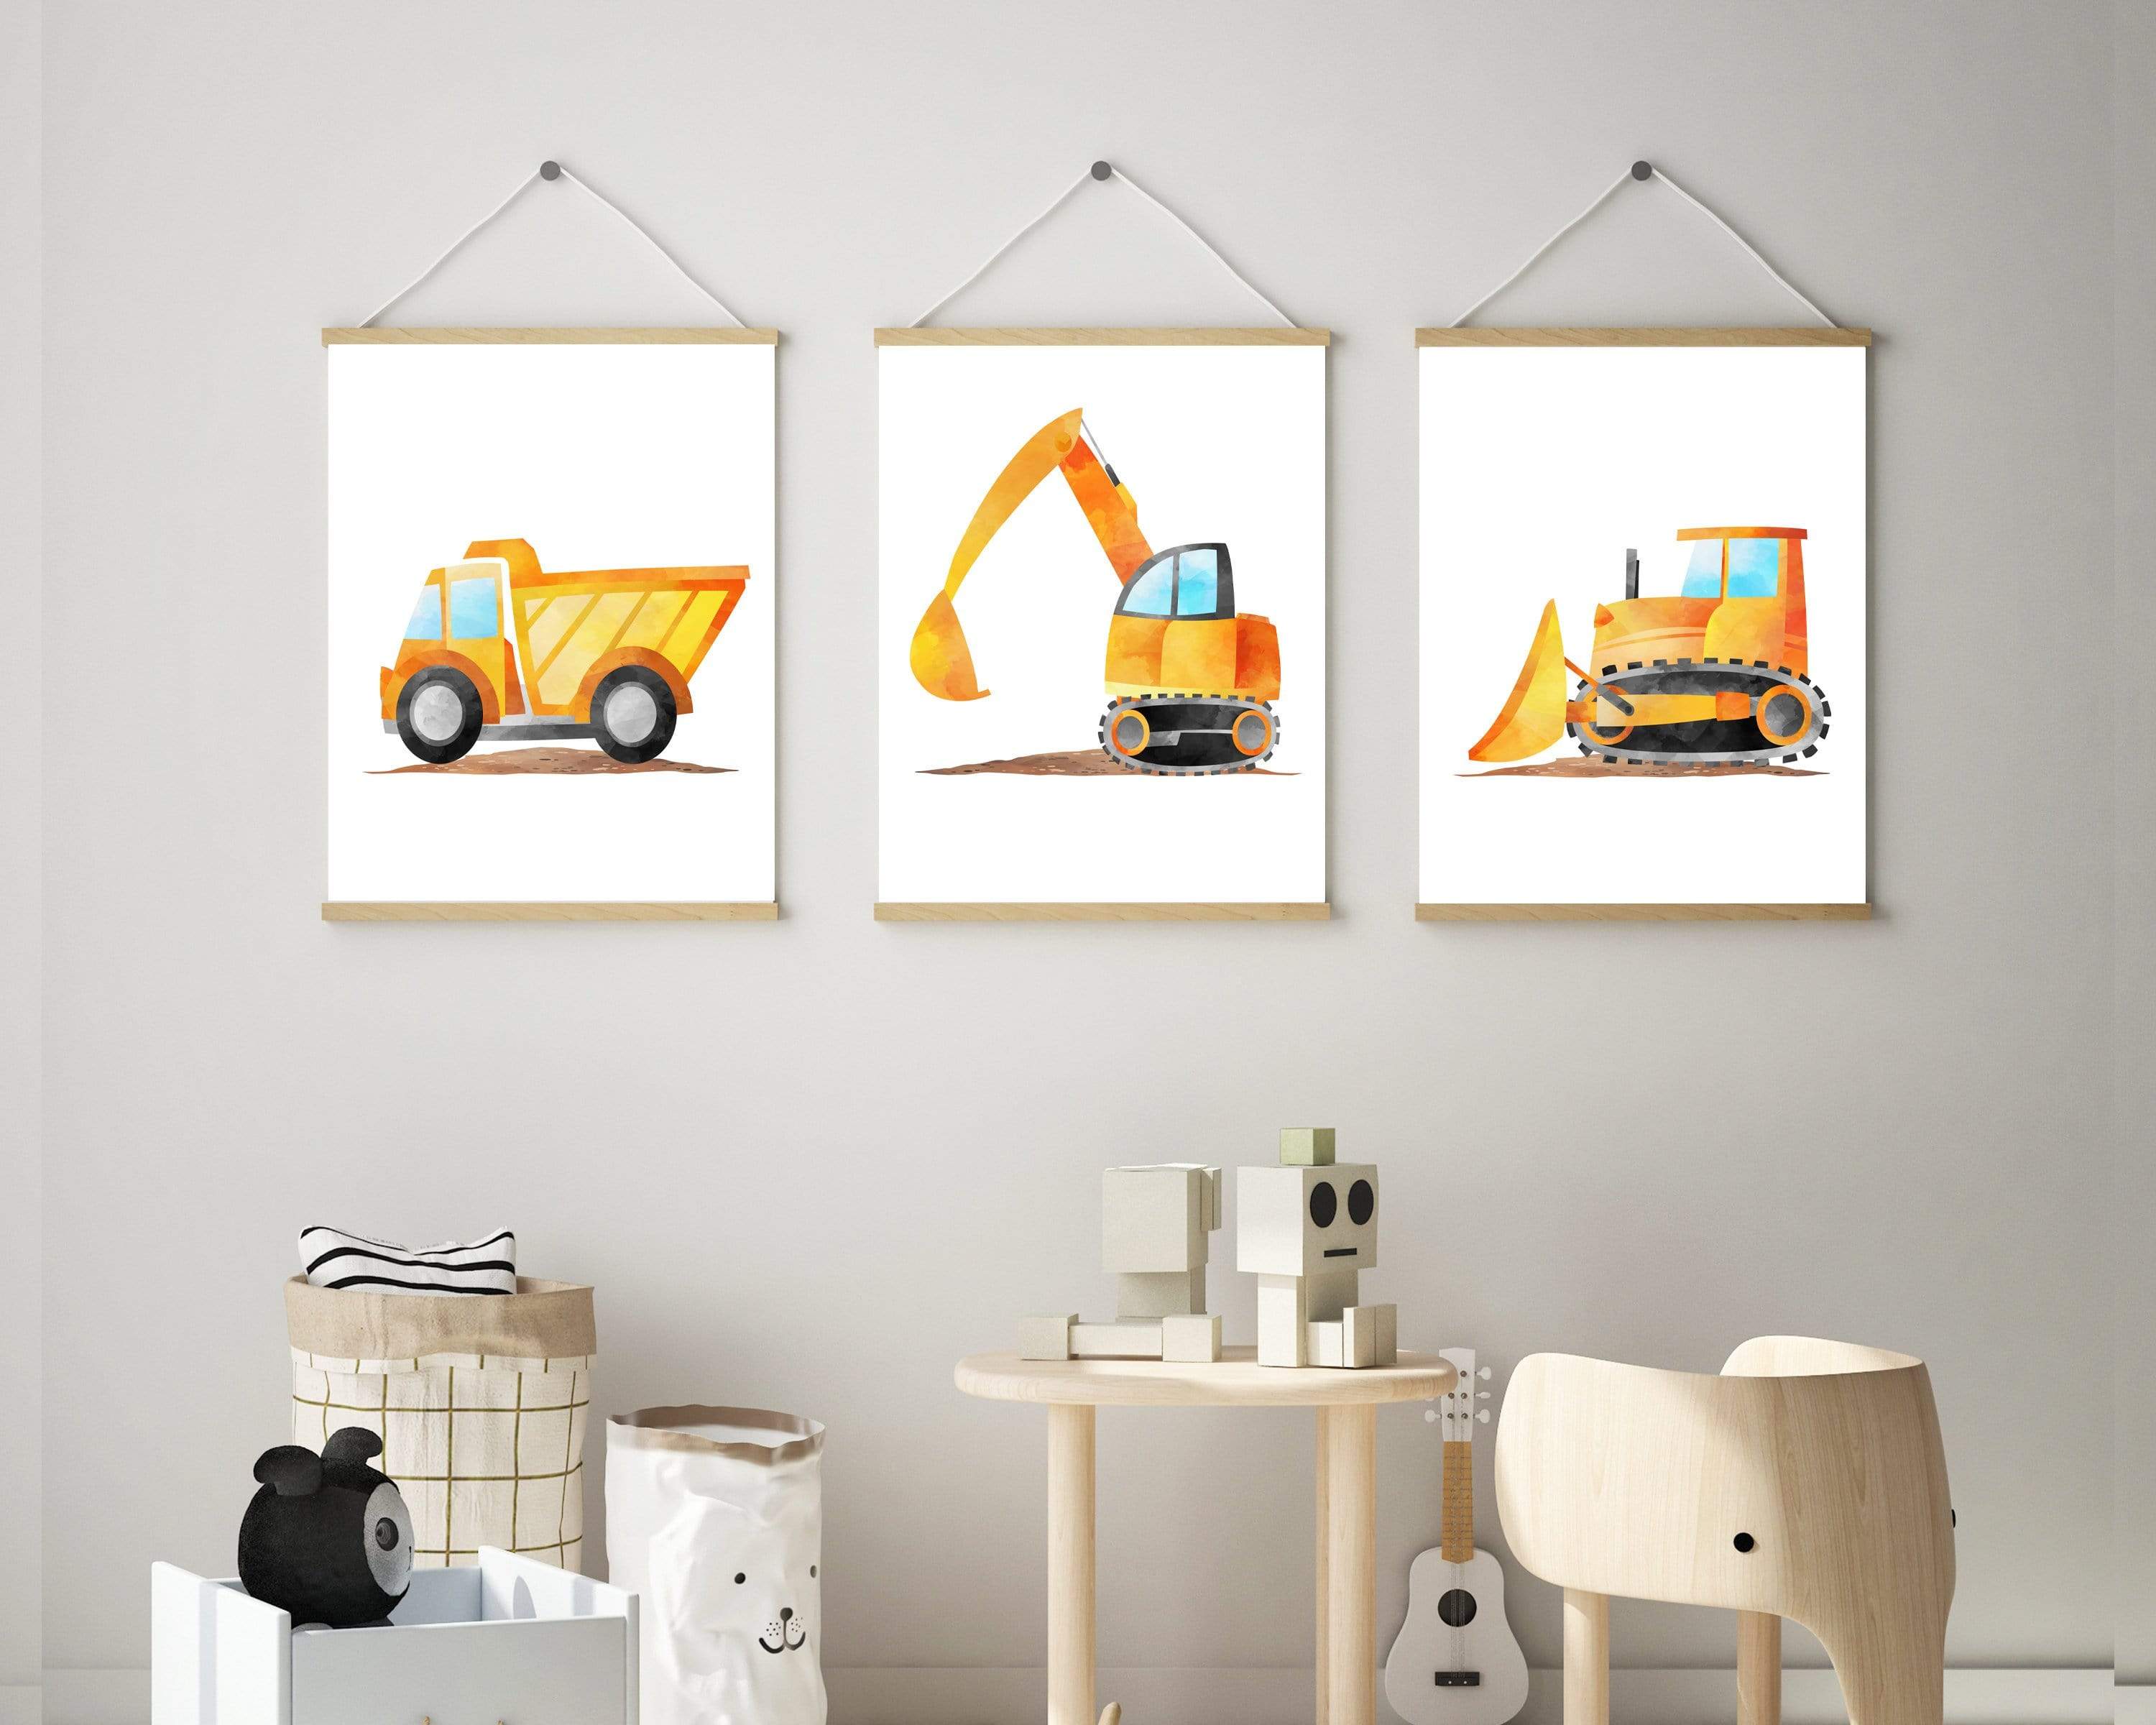 Construction Wall Art, Truck art prints, Boys wall decor, Truck wall art nursery art print baby nursery bedroom decor